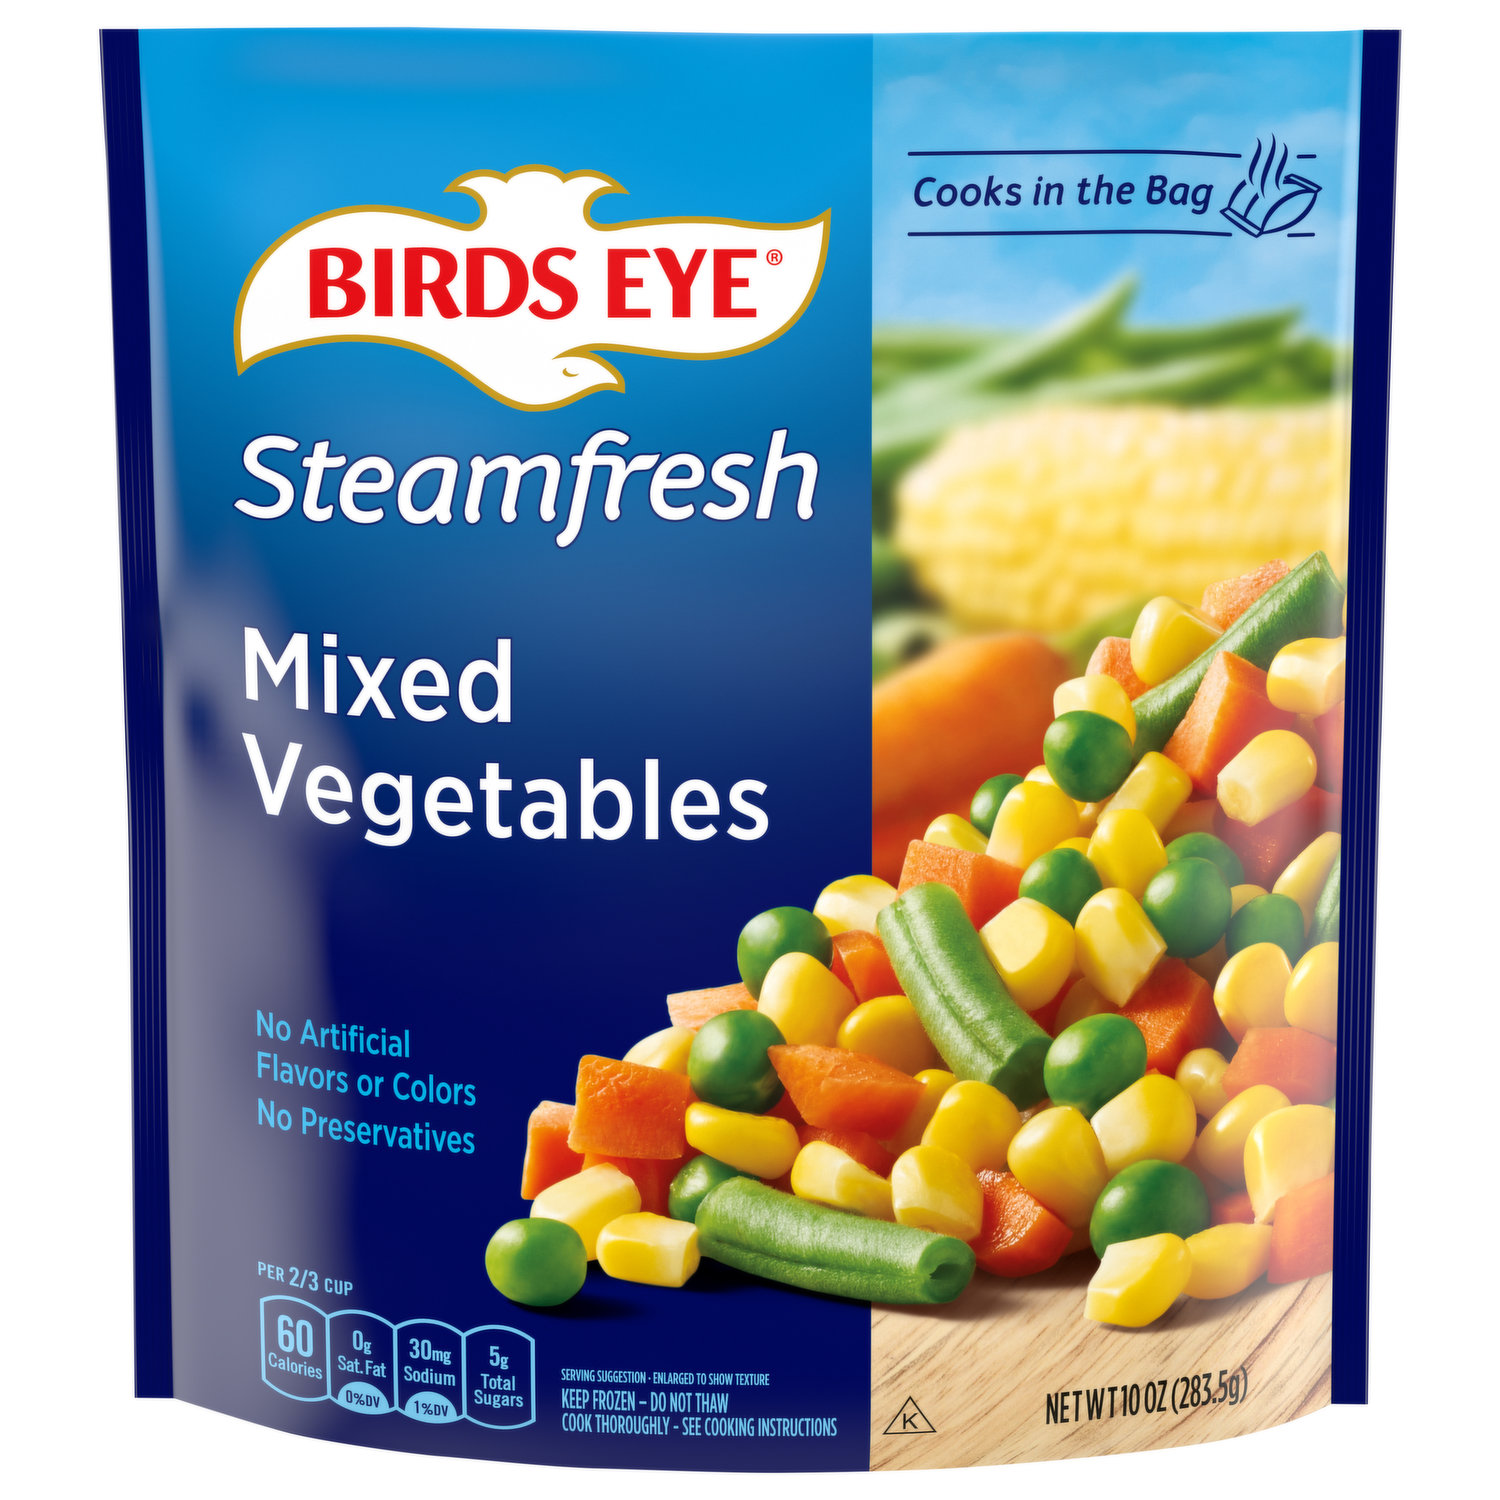 Birds Eye Steamfresh Lightly Seasoned Asian Medley - Shop Mixed